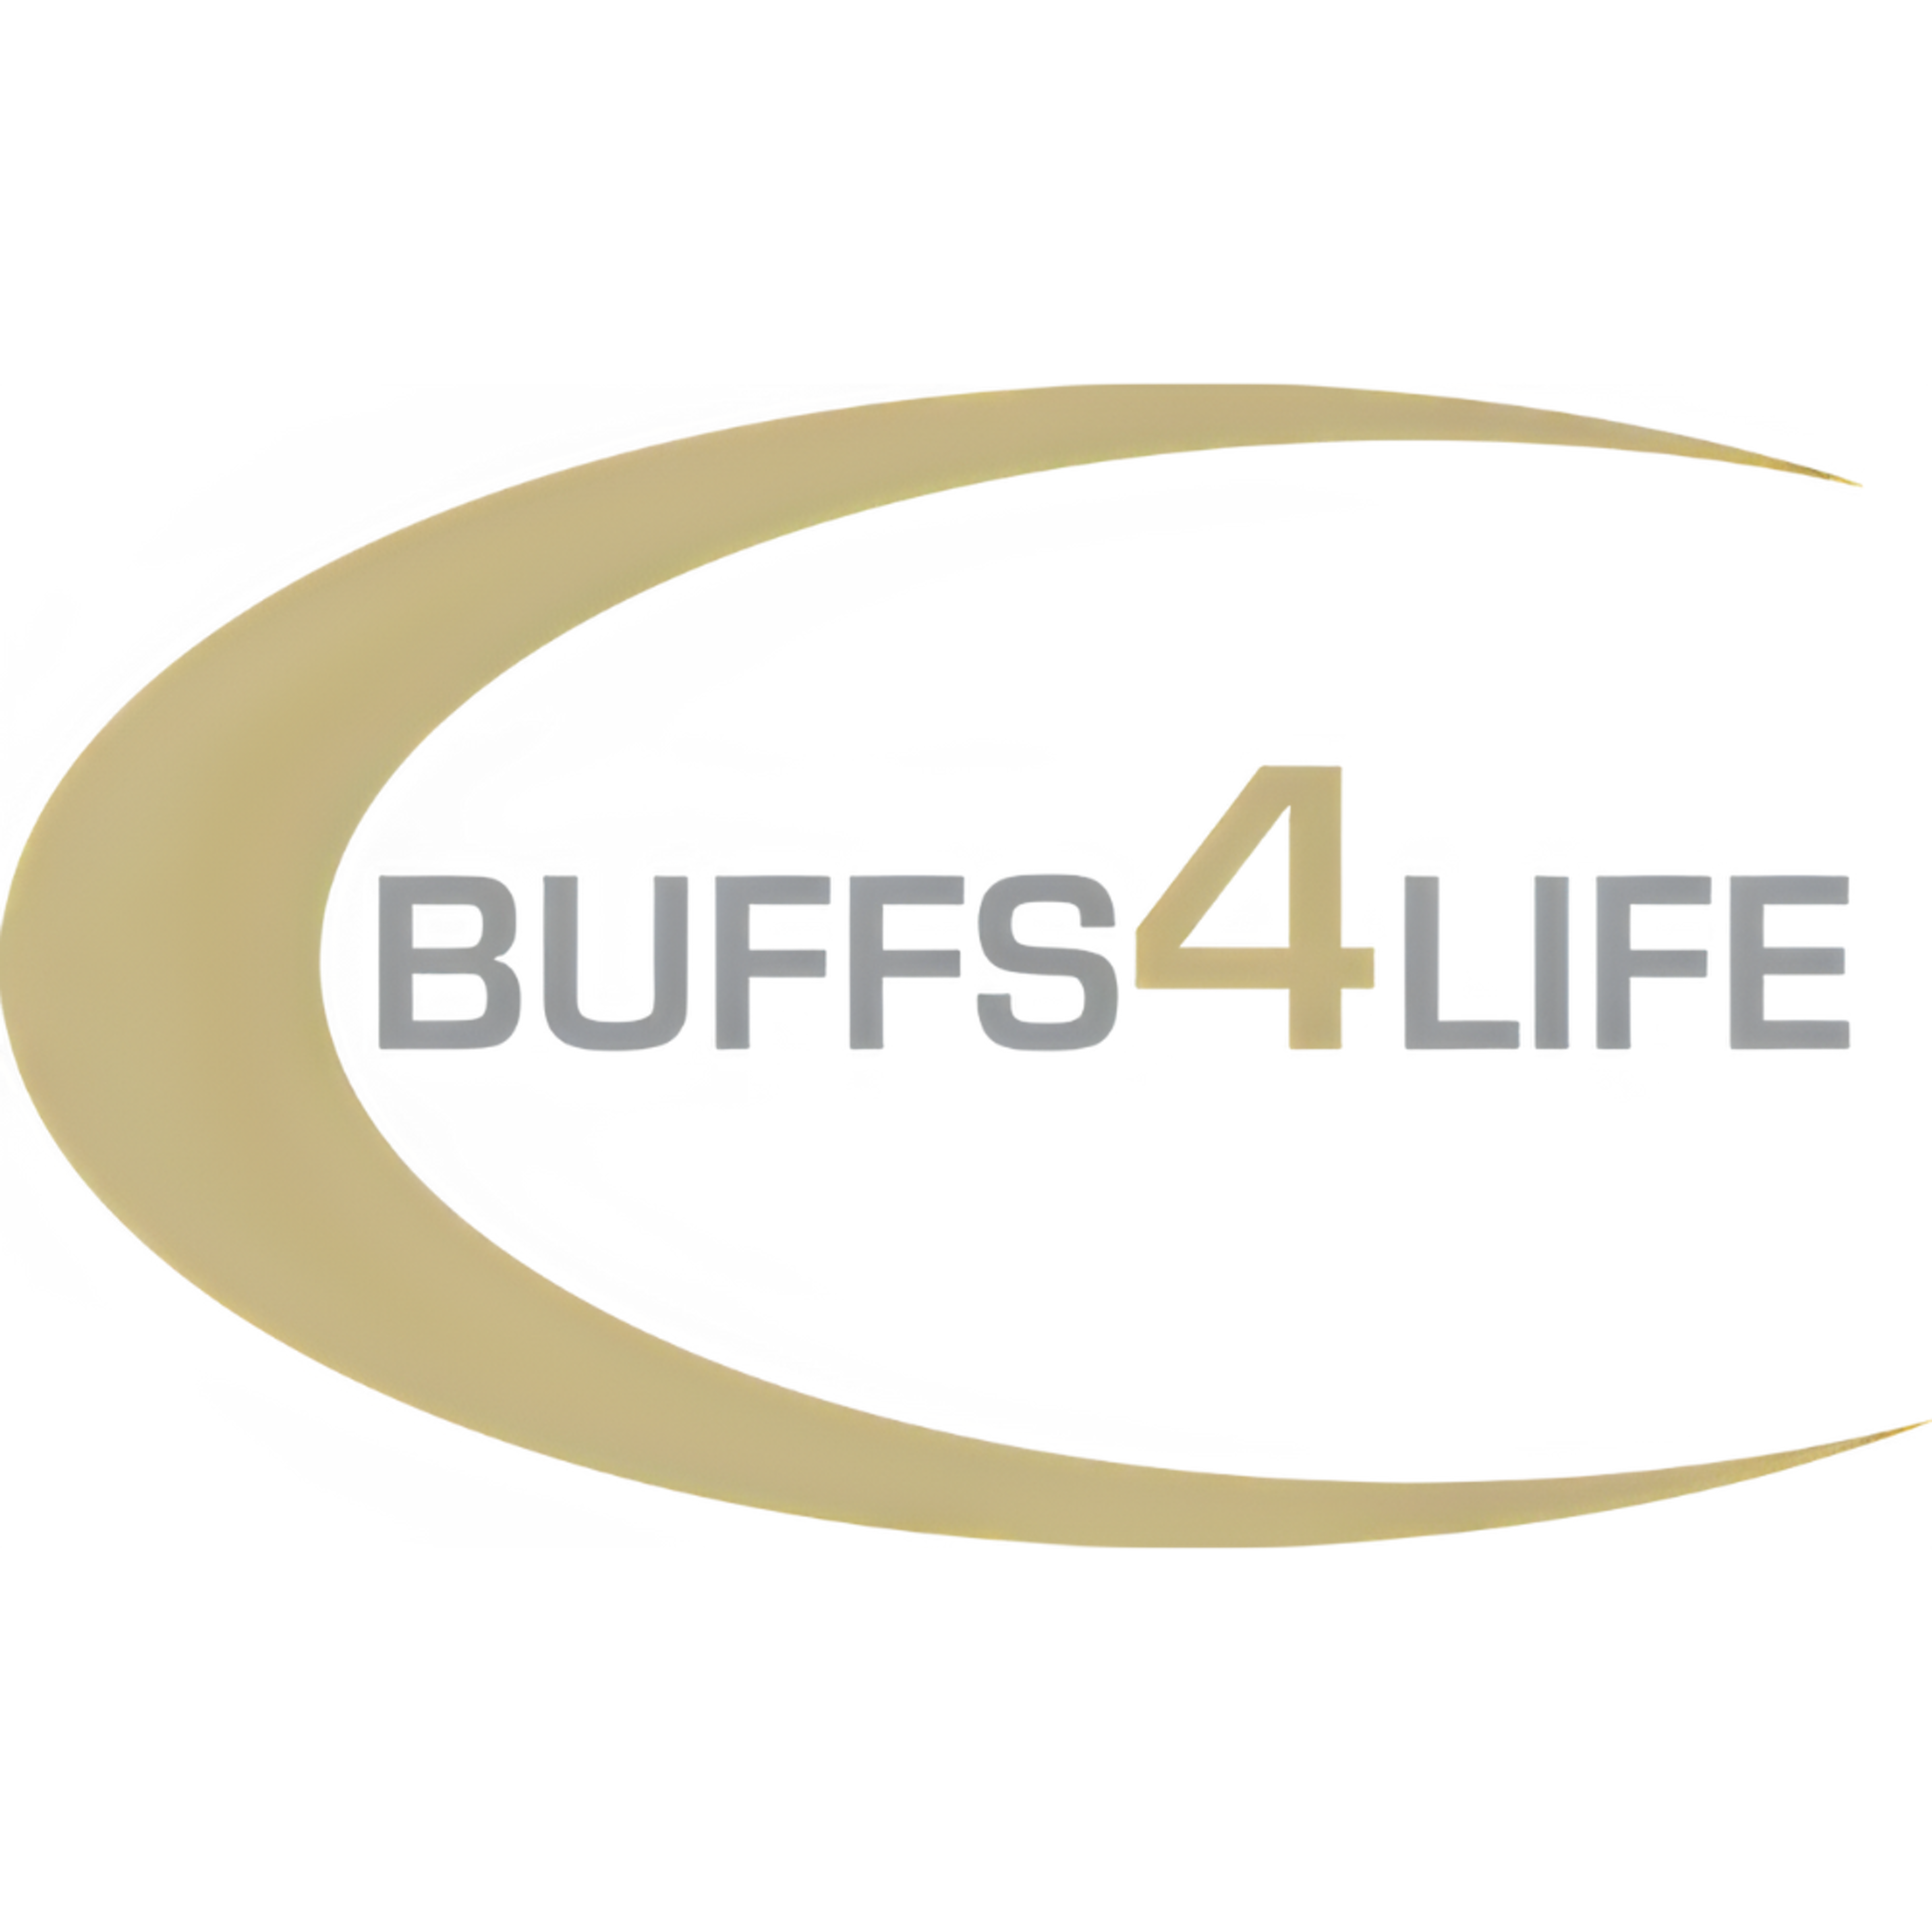 Buffs4life Logo